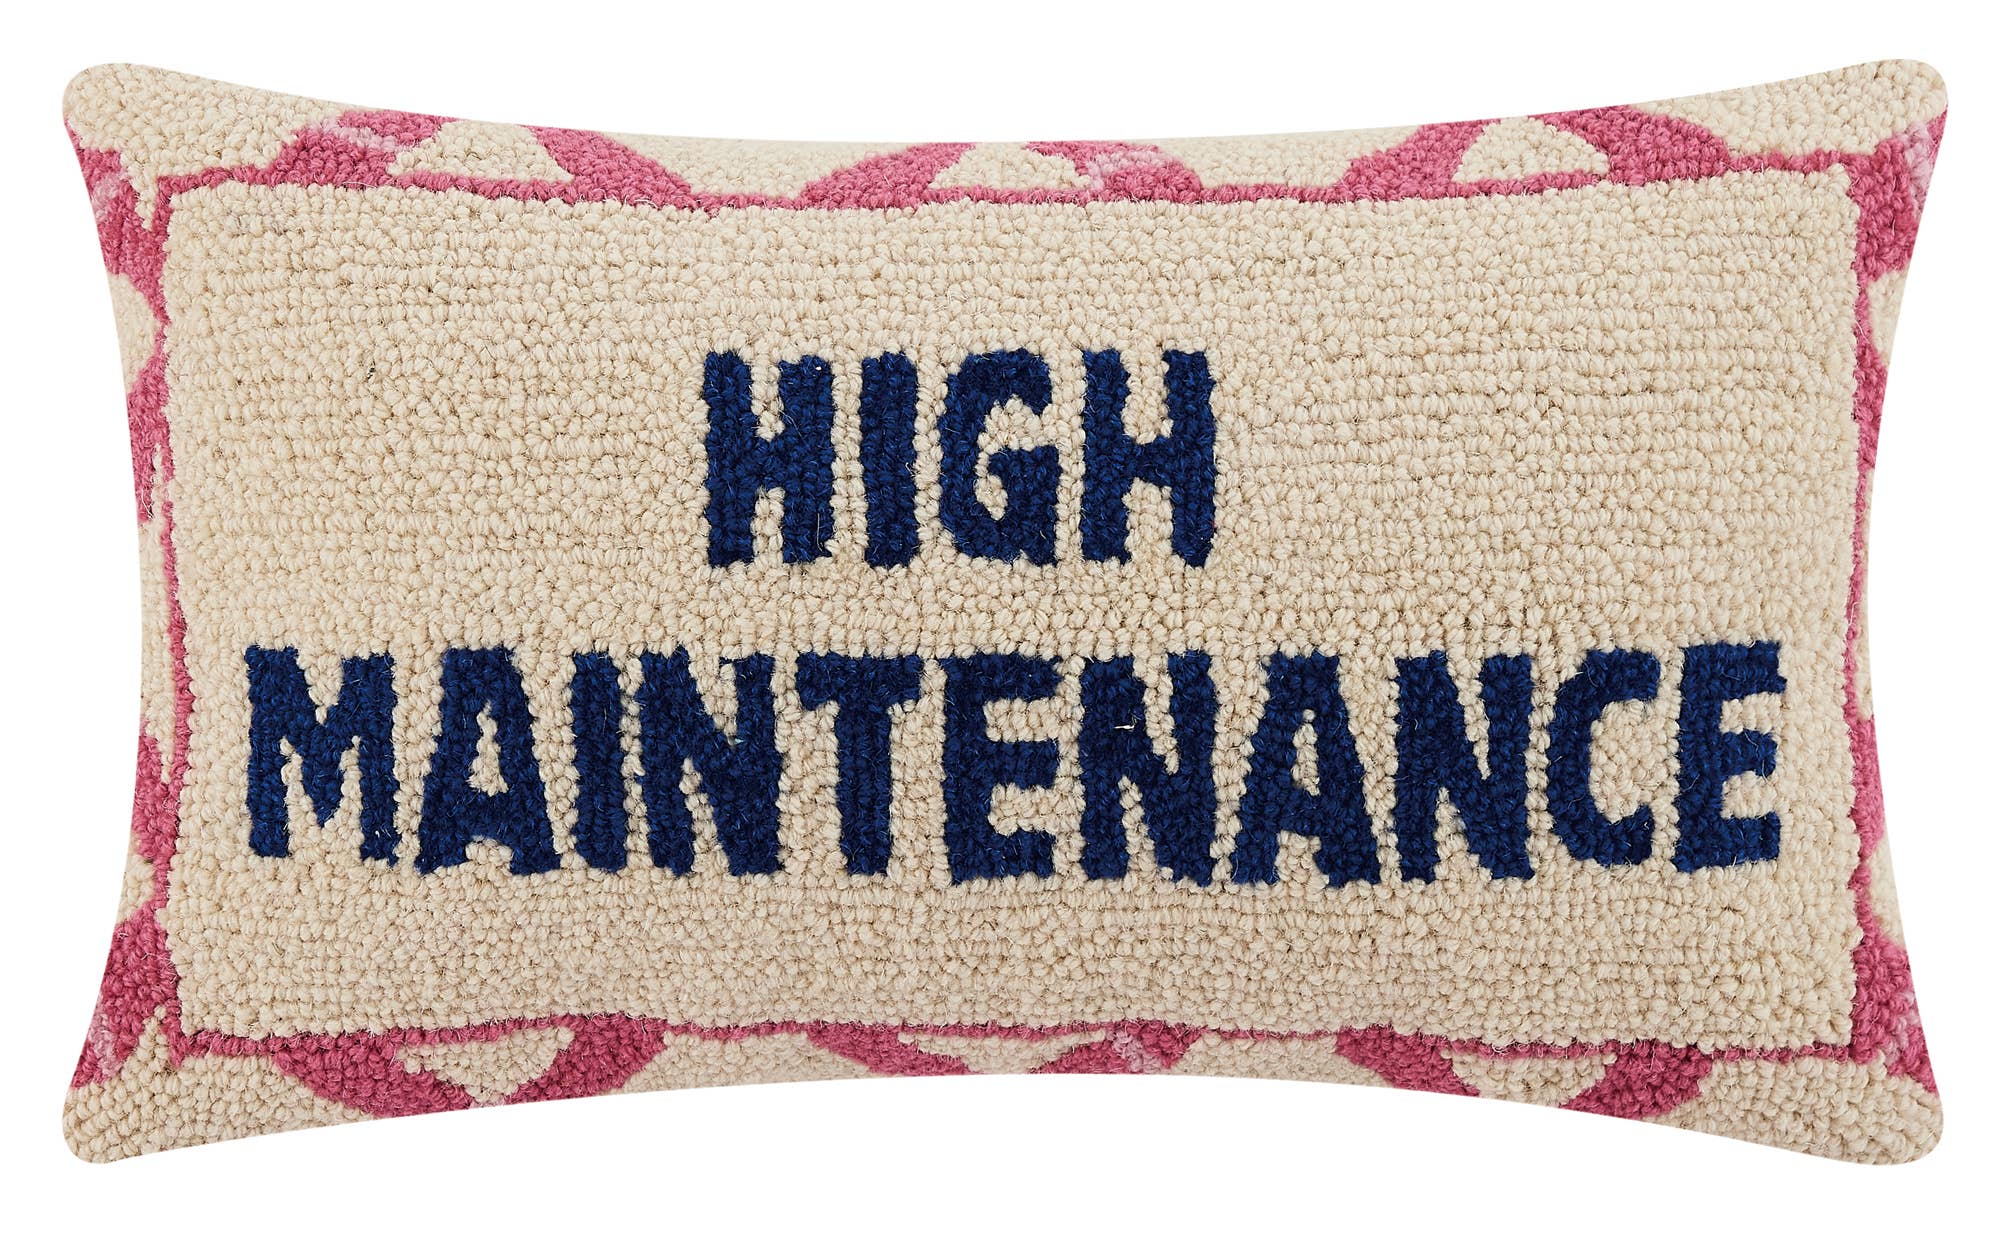 High Maintenance Hook Pillow - The Preppy Bunny